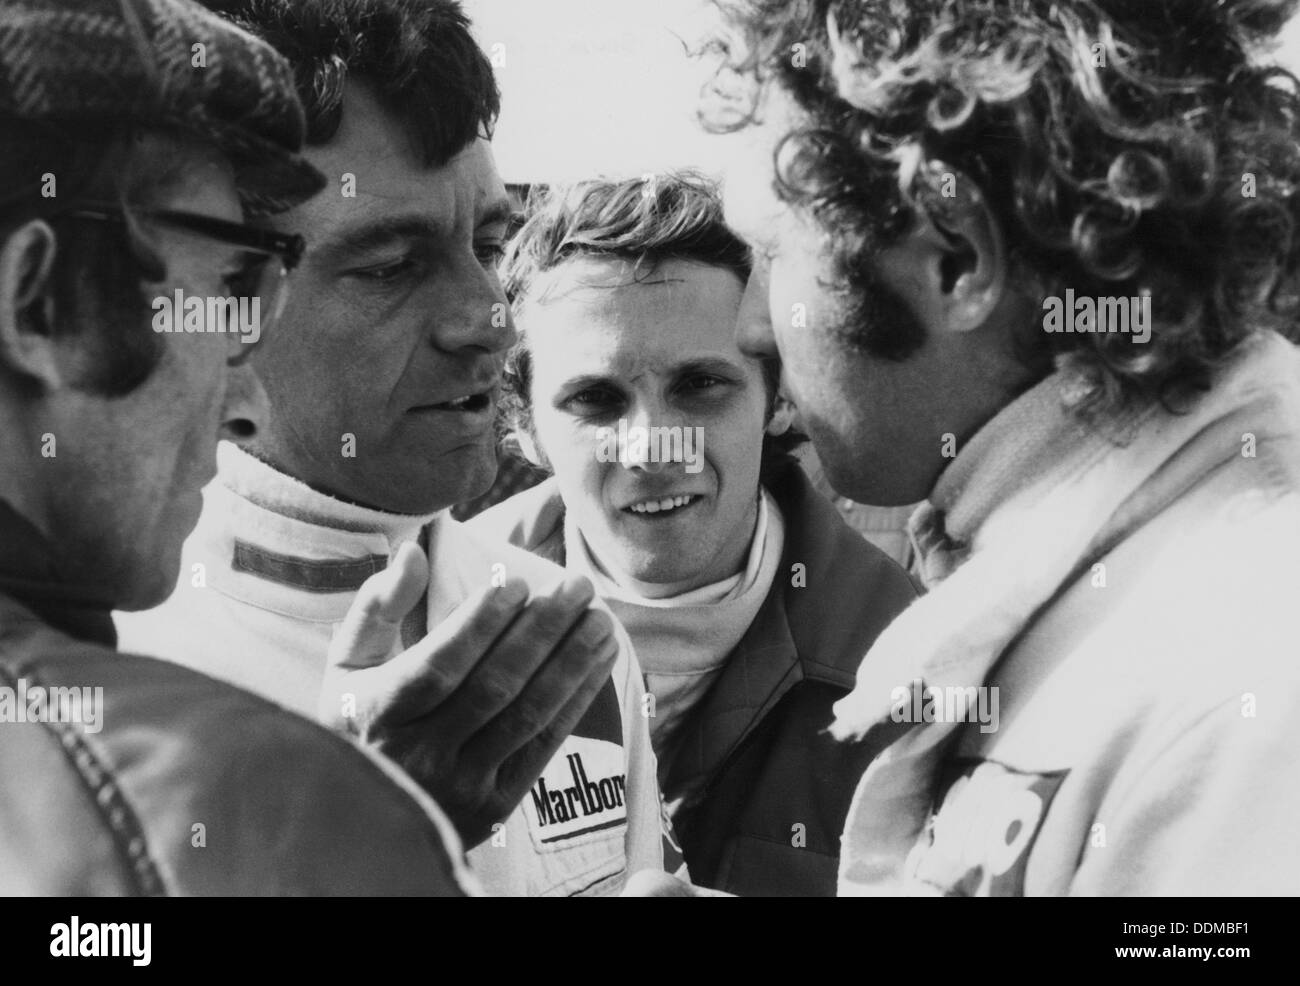 Mauro Forghieri, Alex Soler-Roig, Niki Lauda and Jocken Mass at Zandvoort, (1972?). Artist: Unknown Stock Photo